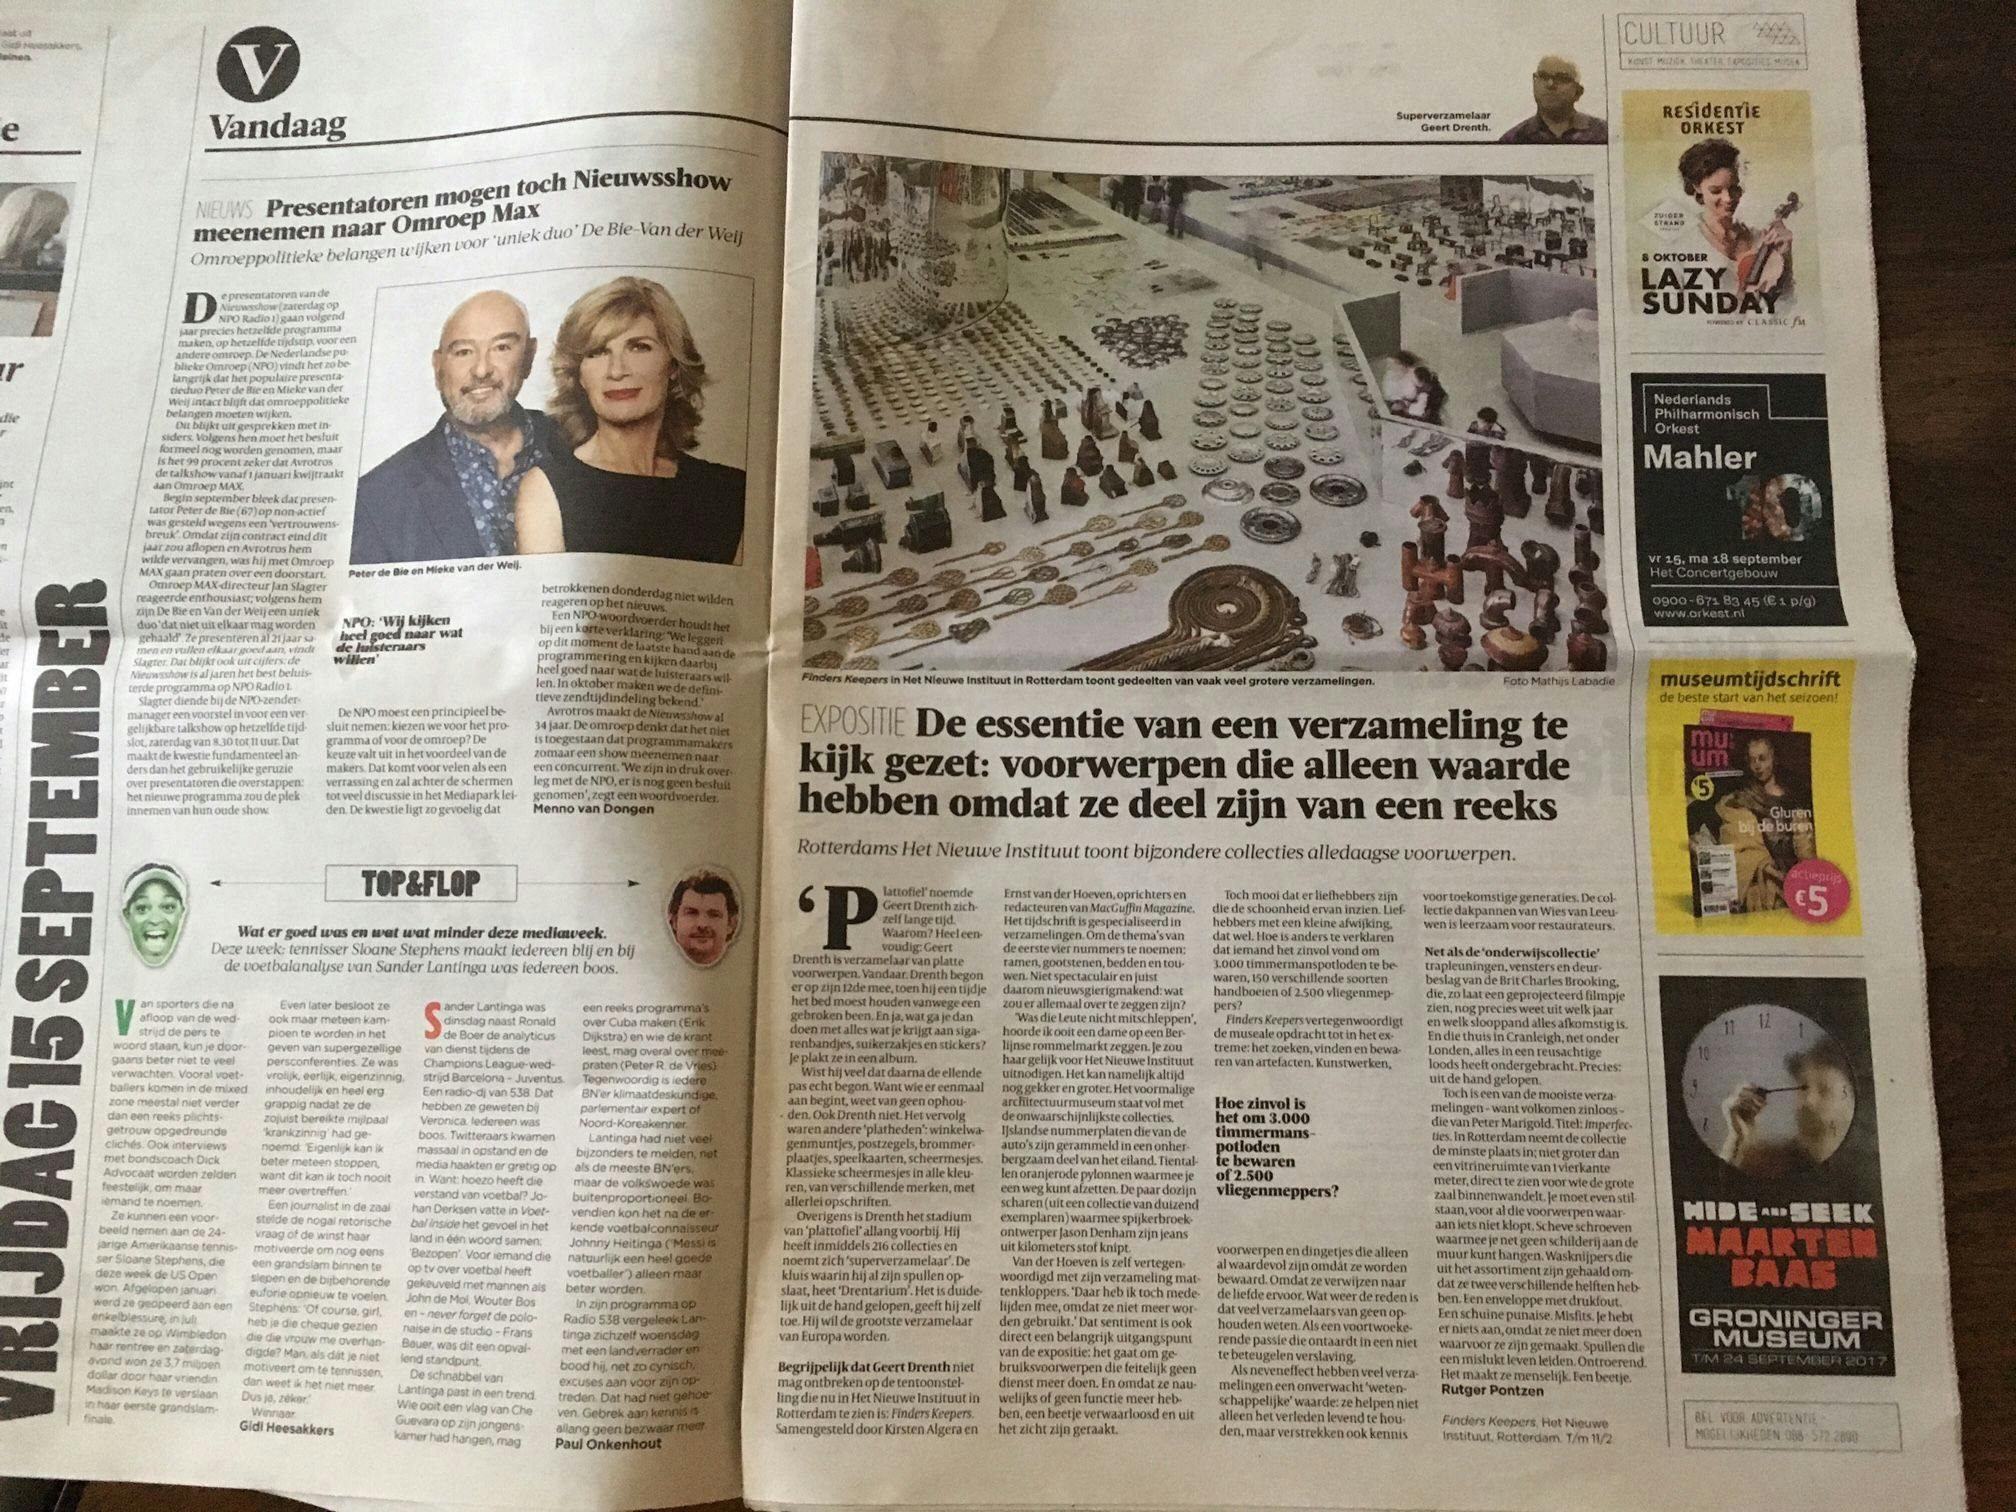 Finders Keepers in de Volkskrant, 15 September 2017